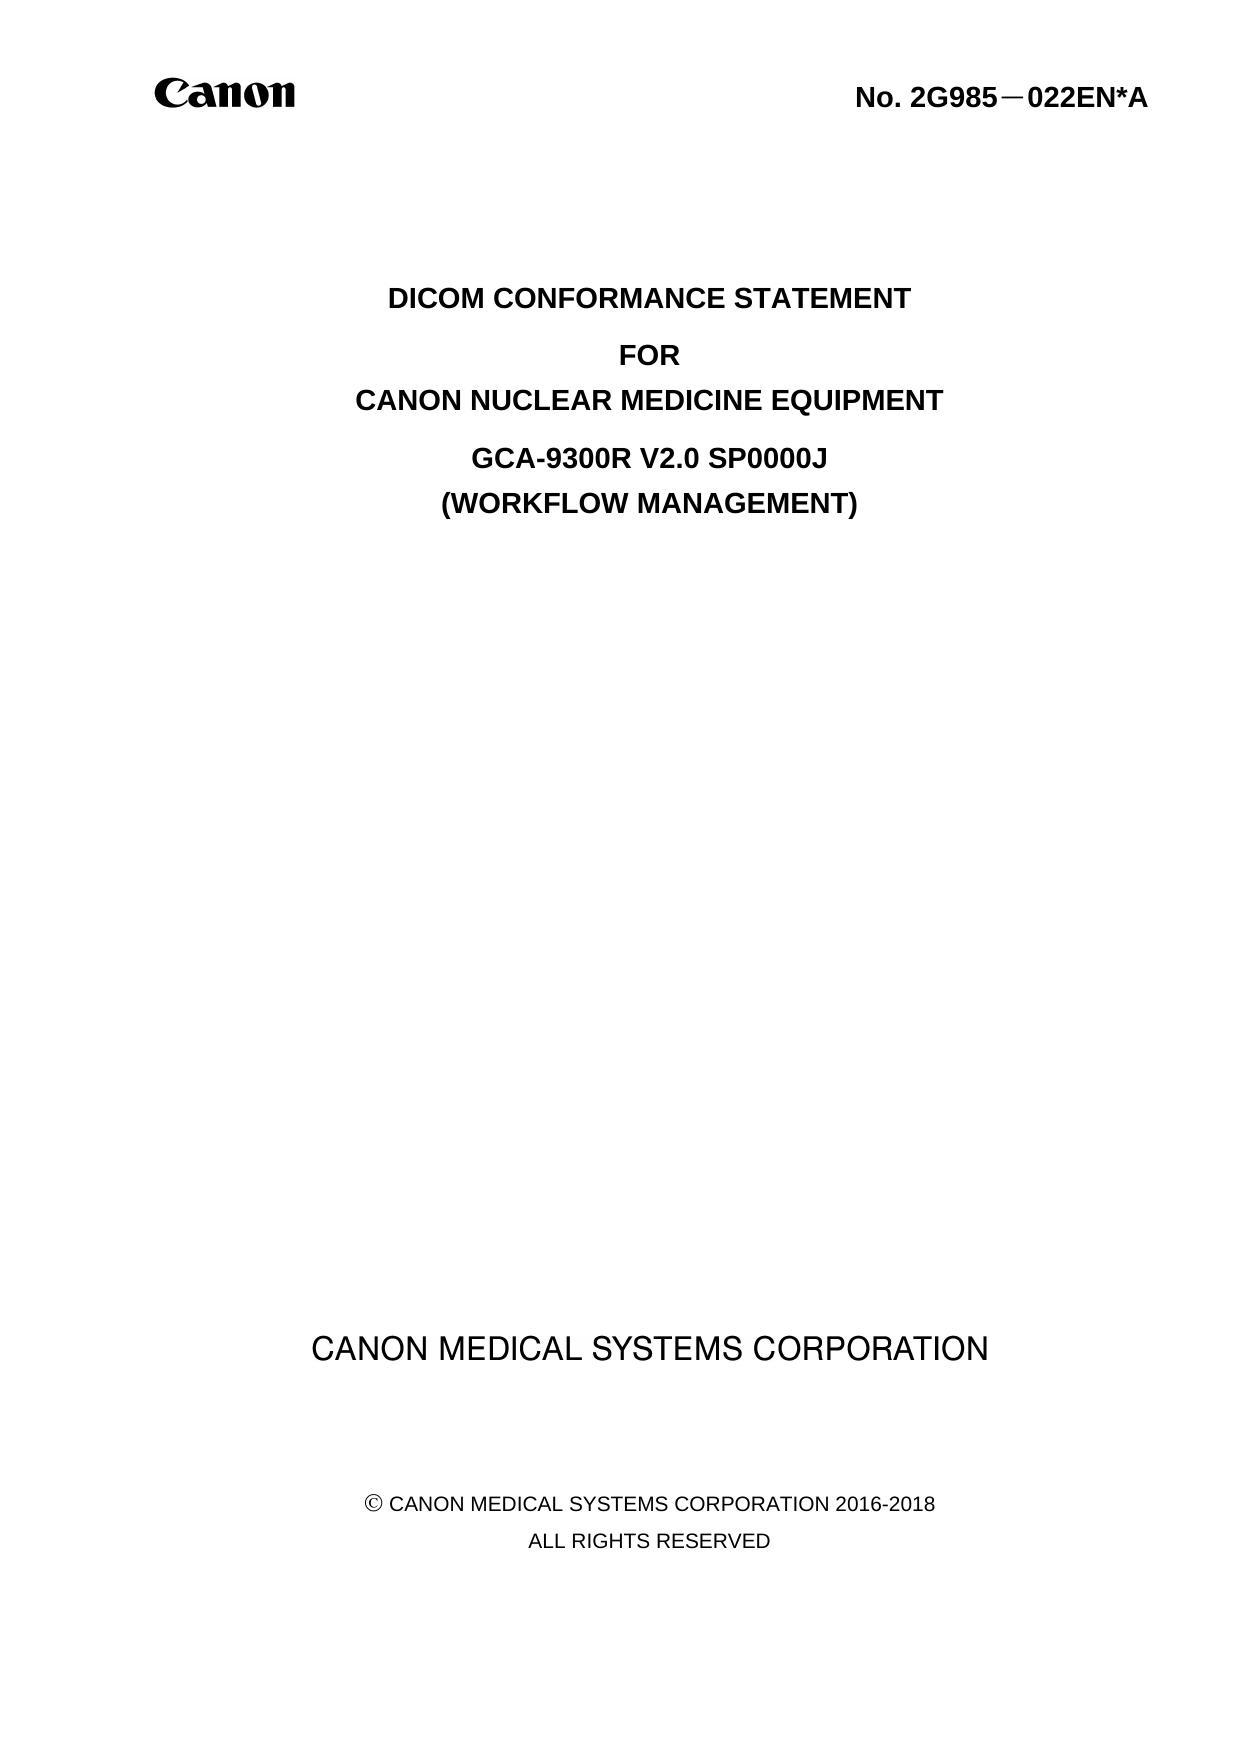 dicom-conformance-statement-for-canon-nuclear-medicine-equipment-gca-9300r-v20.pdf